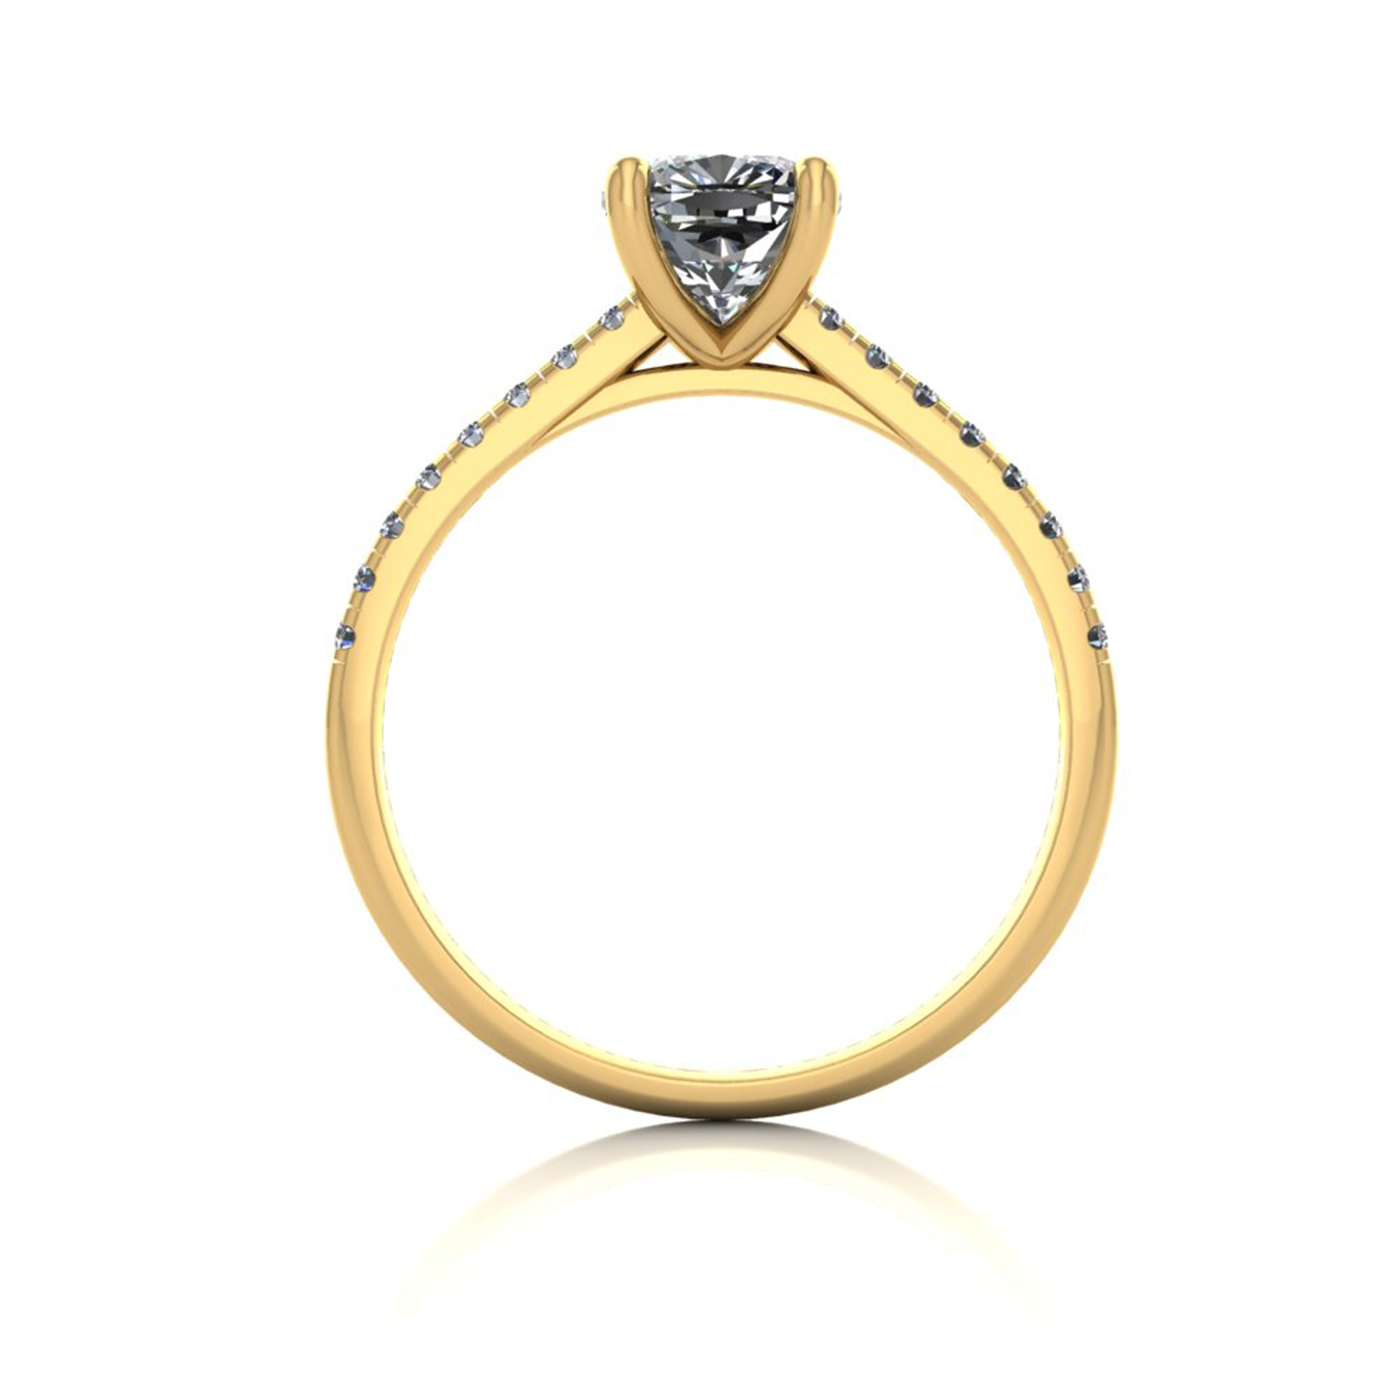 18k yellow gold 1.20ct 4 prongs cushion cut diamond engagement ring with whisper thin pavÉ set band